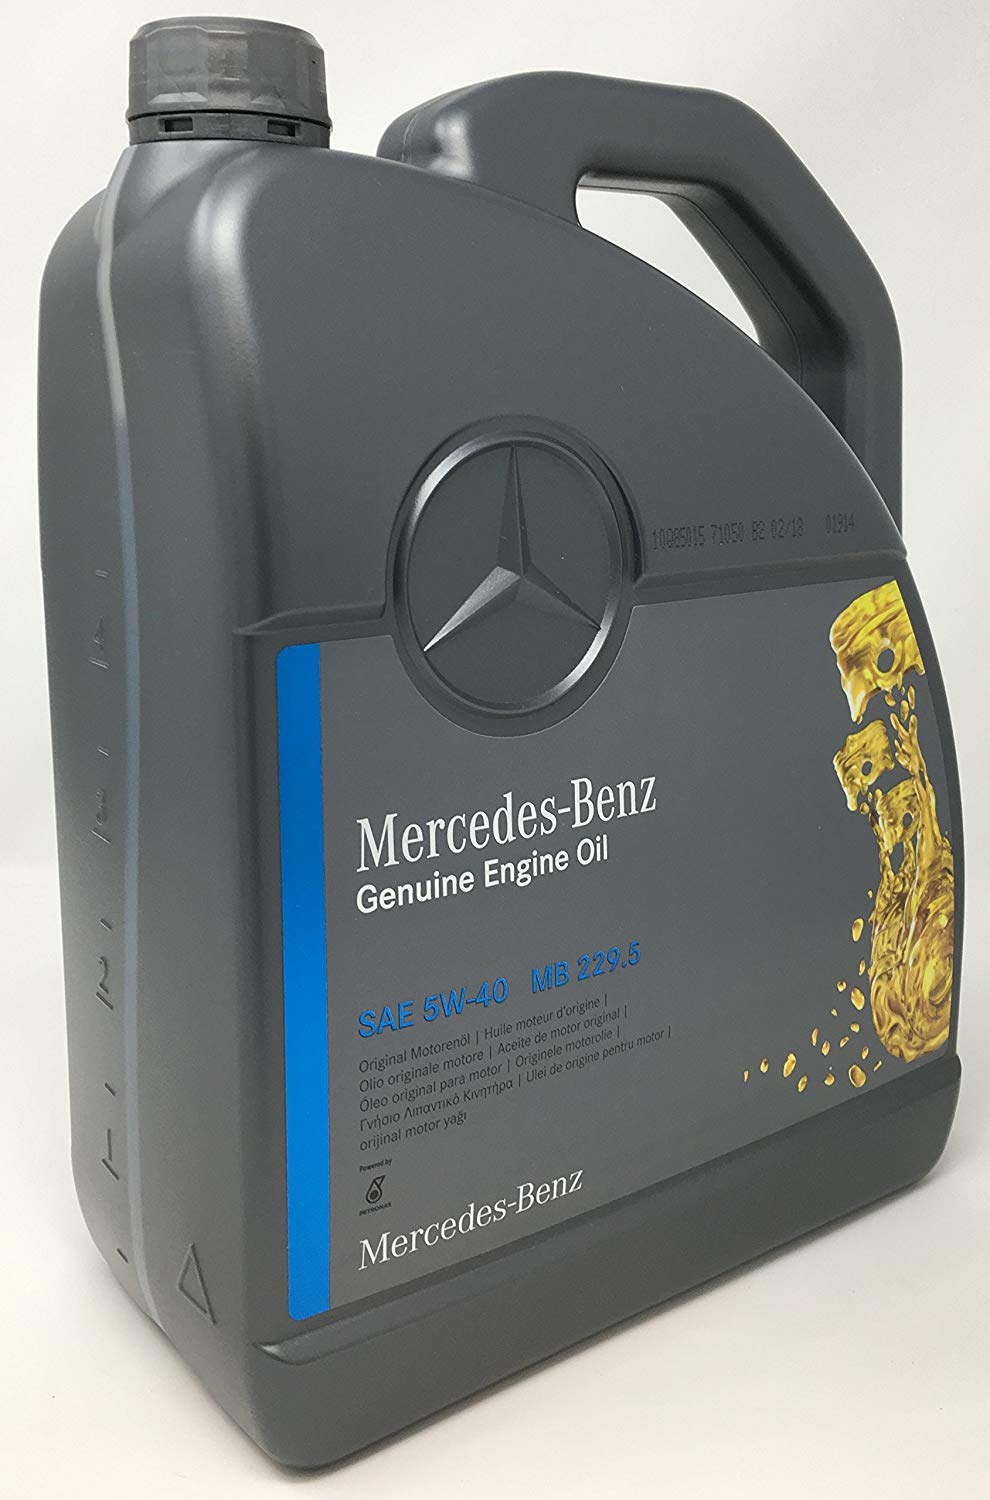 Engine oil Mercedes Genuine Engine Oil 5W-40, 5L Mercedes A 000 989 92 02 13 AIFE